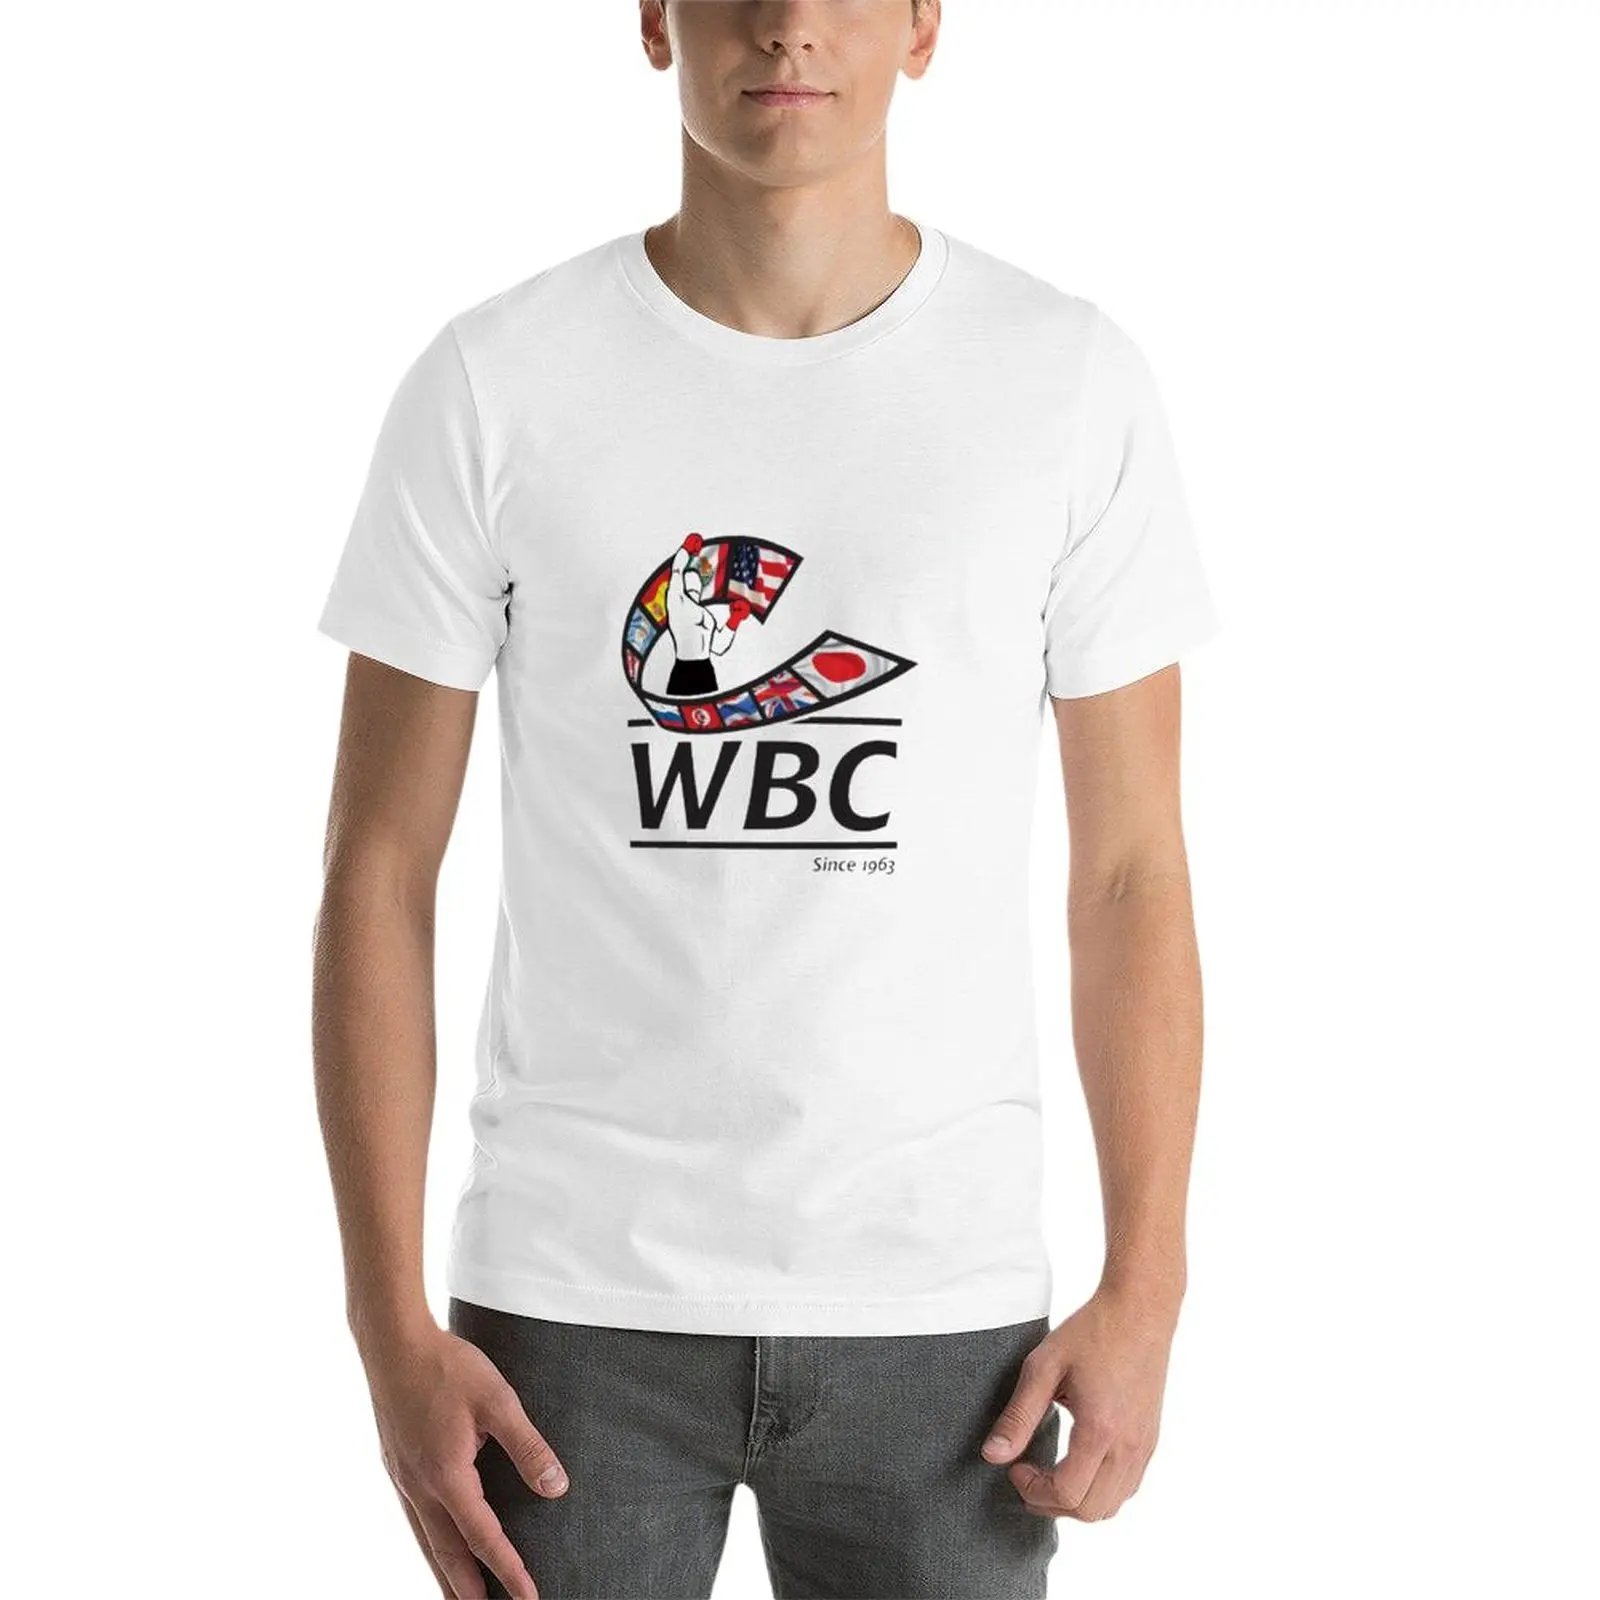 Camiseta masculina com logotipo máscara de boxe WBC, máscara Tyson Fury, tamanho grande, roupas kawaii, camiseta de algodão preto, novo, 2021